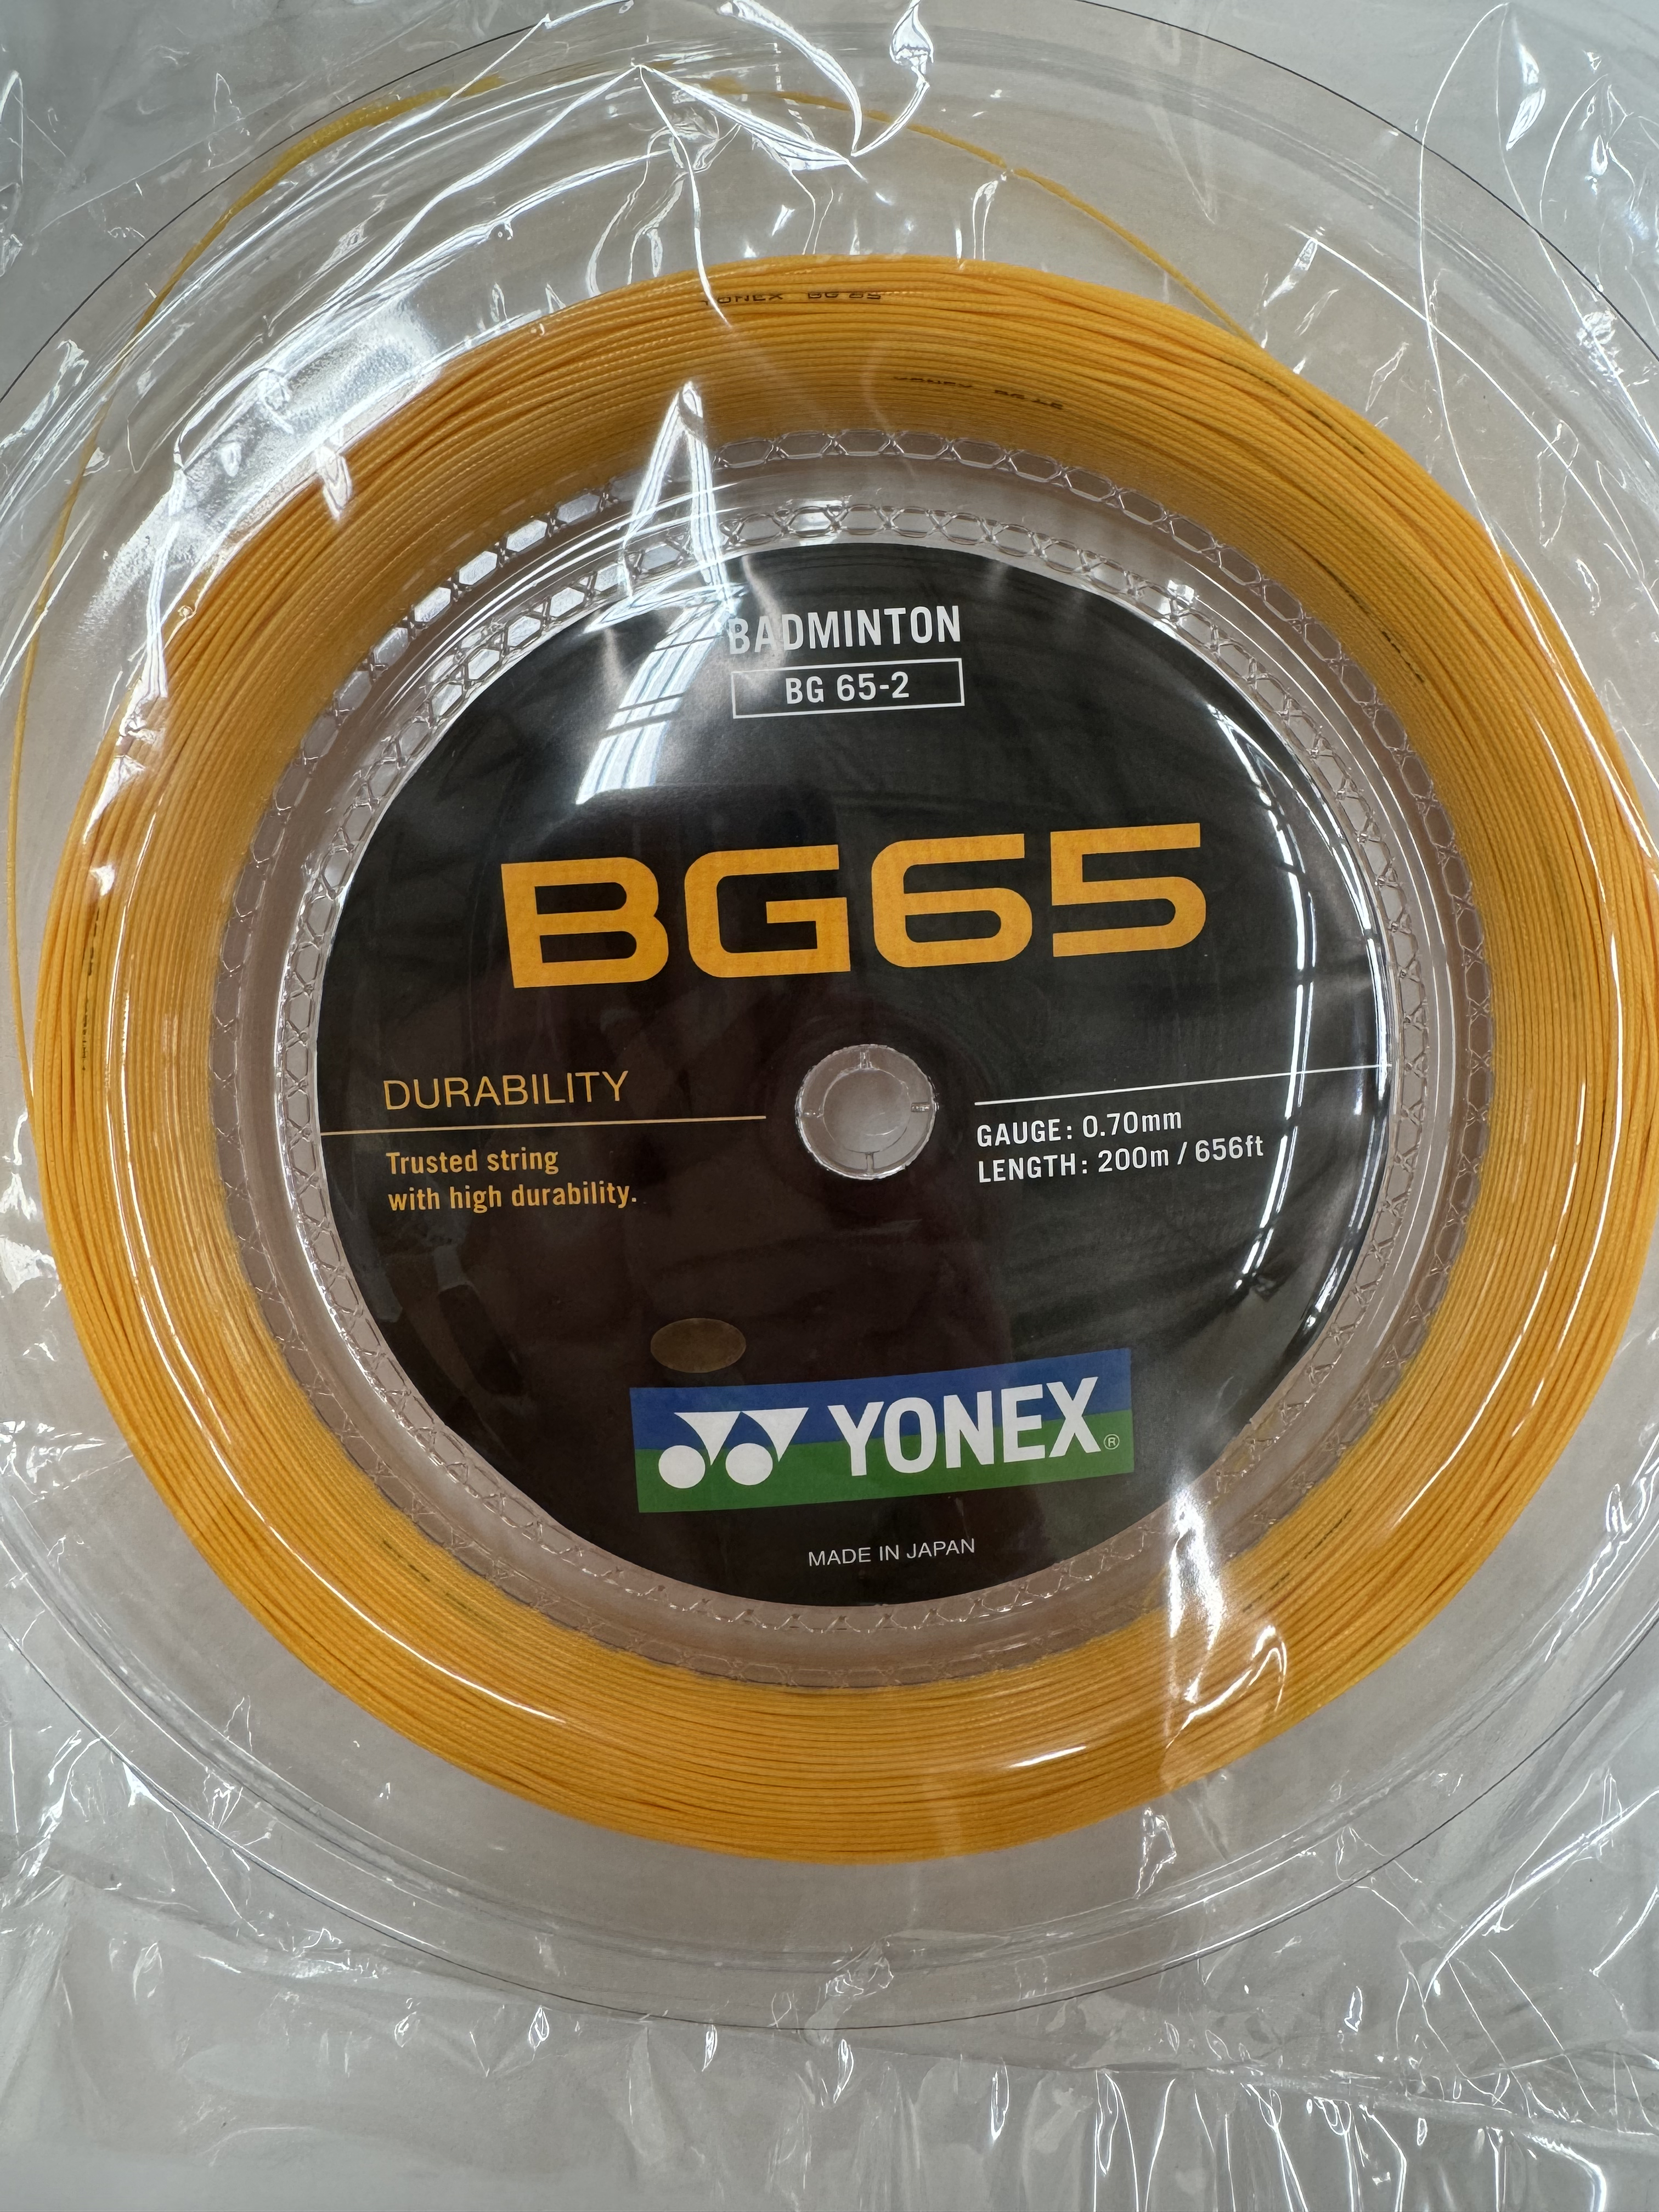 YONEX BG65 Badminton Coil String, 200m, More Durable, Orange